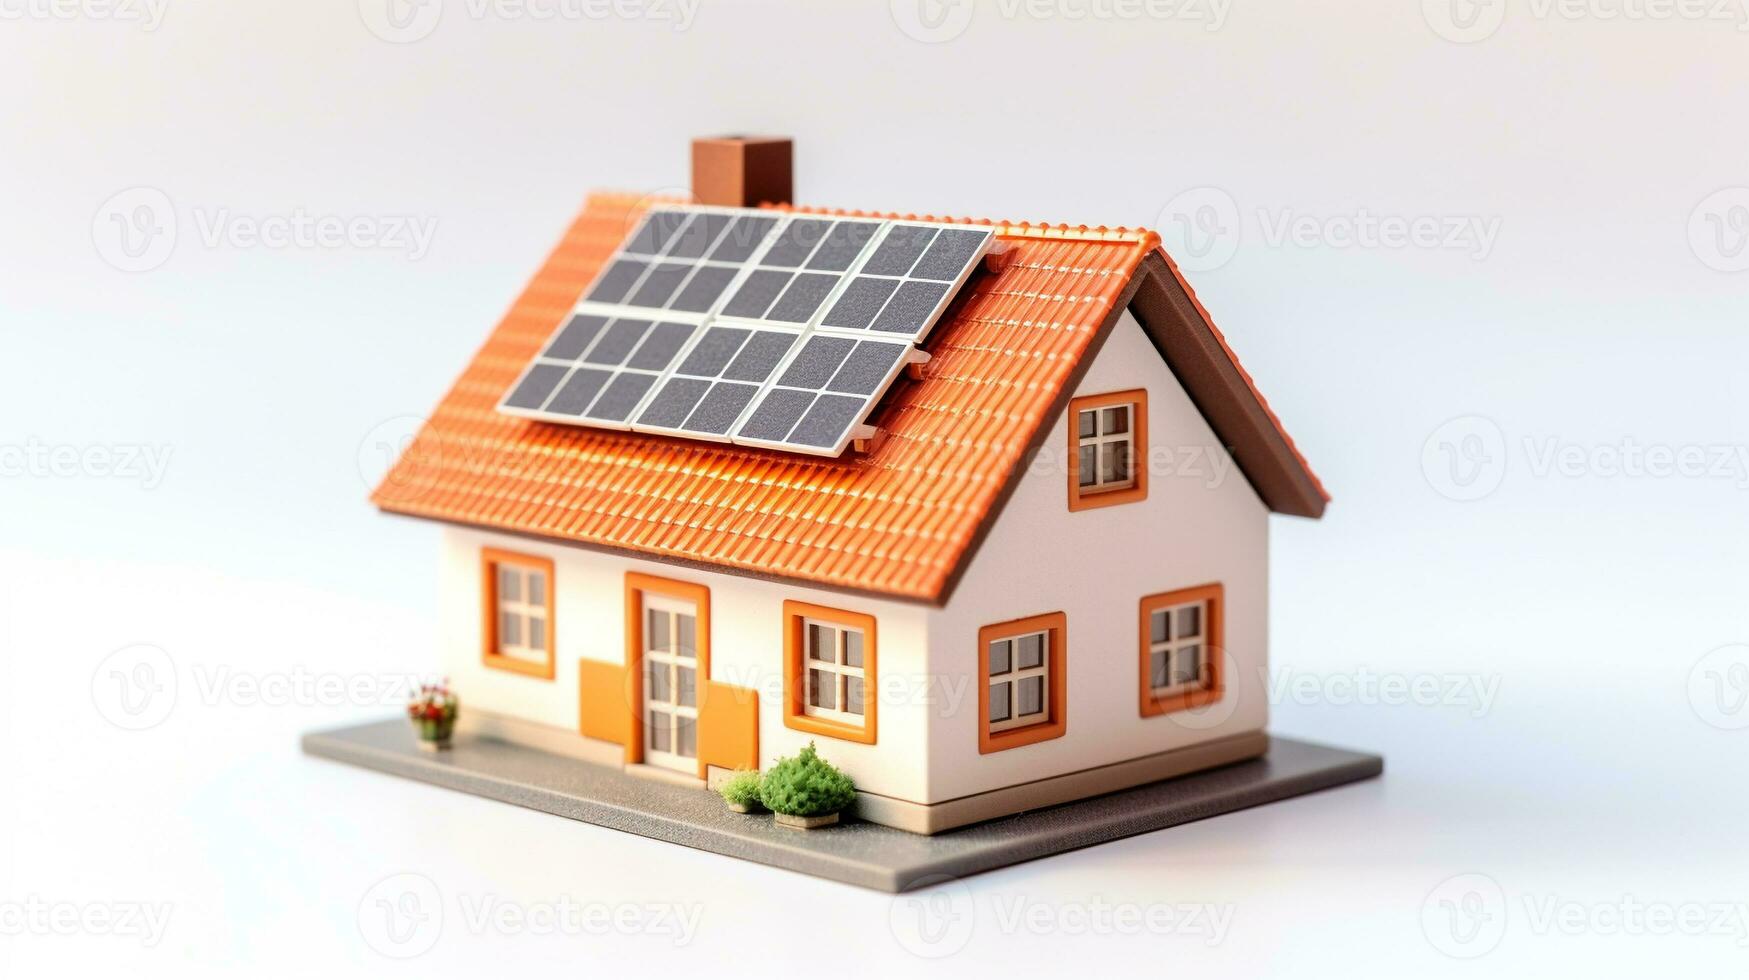 miniatura casa modelo con solar panel en techo en blanco antecedentes. inteligente hogar energía ahorro concepto. generativo ai foto